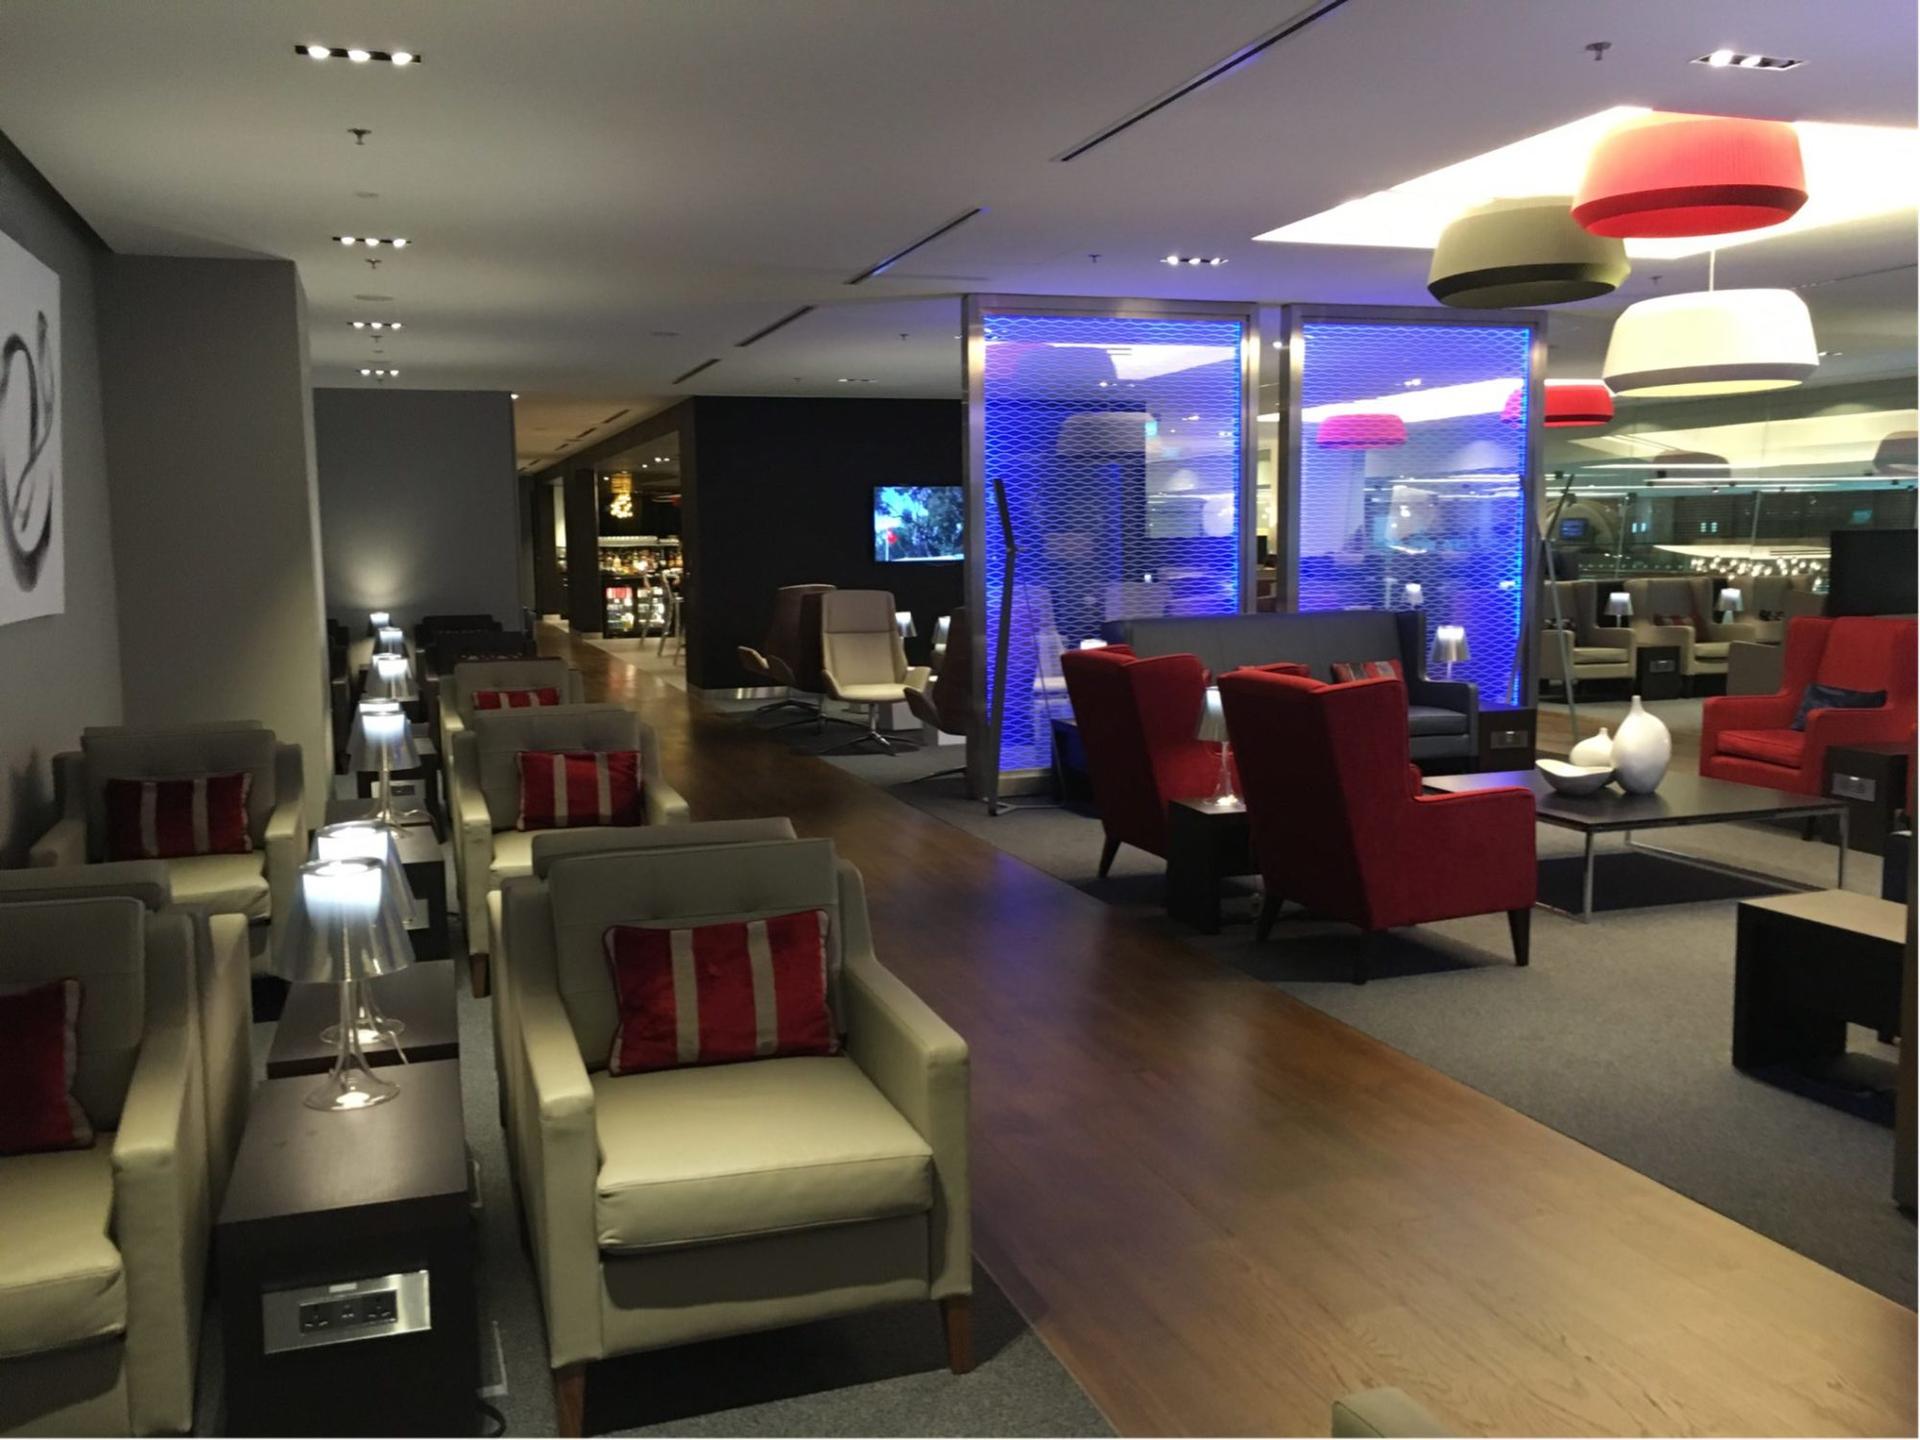 British Airways Singapore Lounge and Concorde Bar image 4 of 15